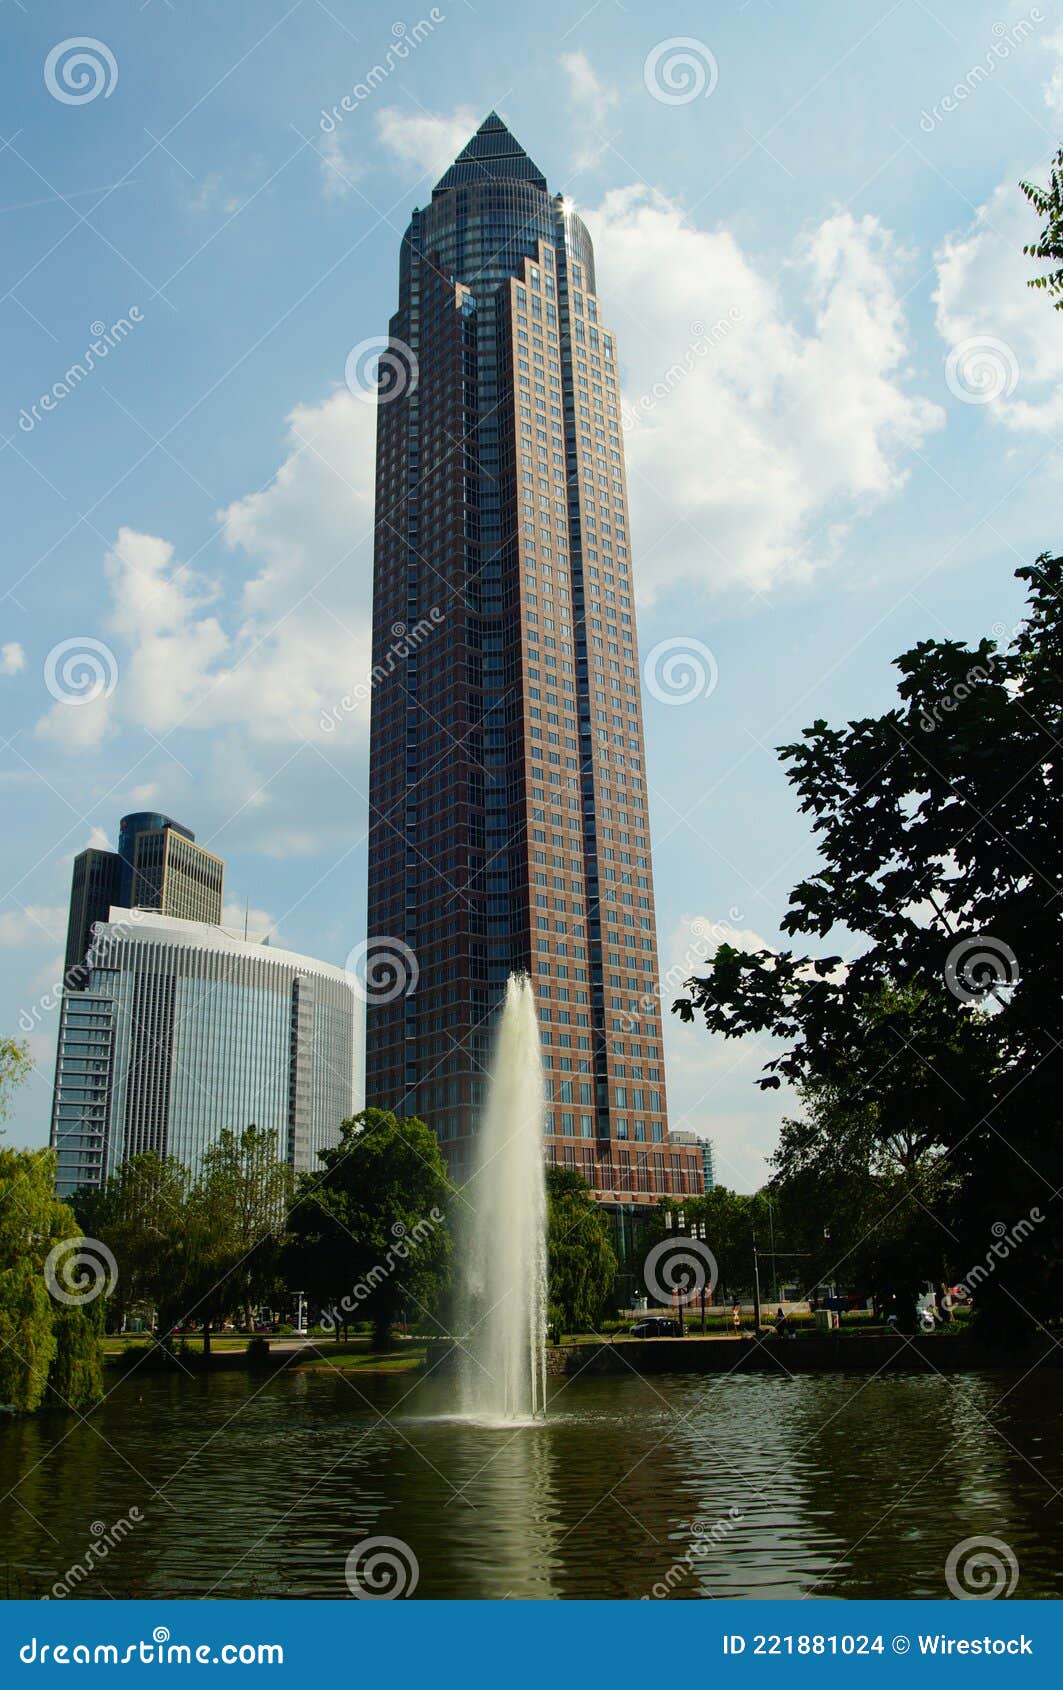 the messeturm rises behind a fountain.